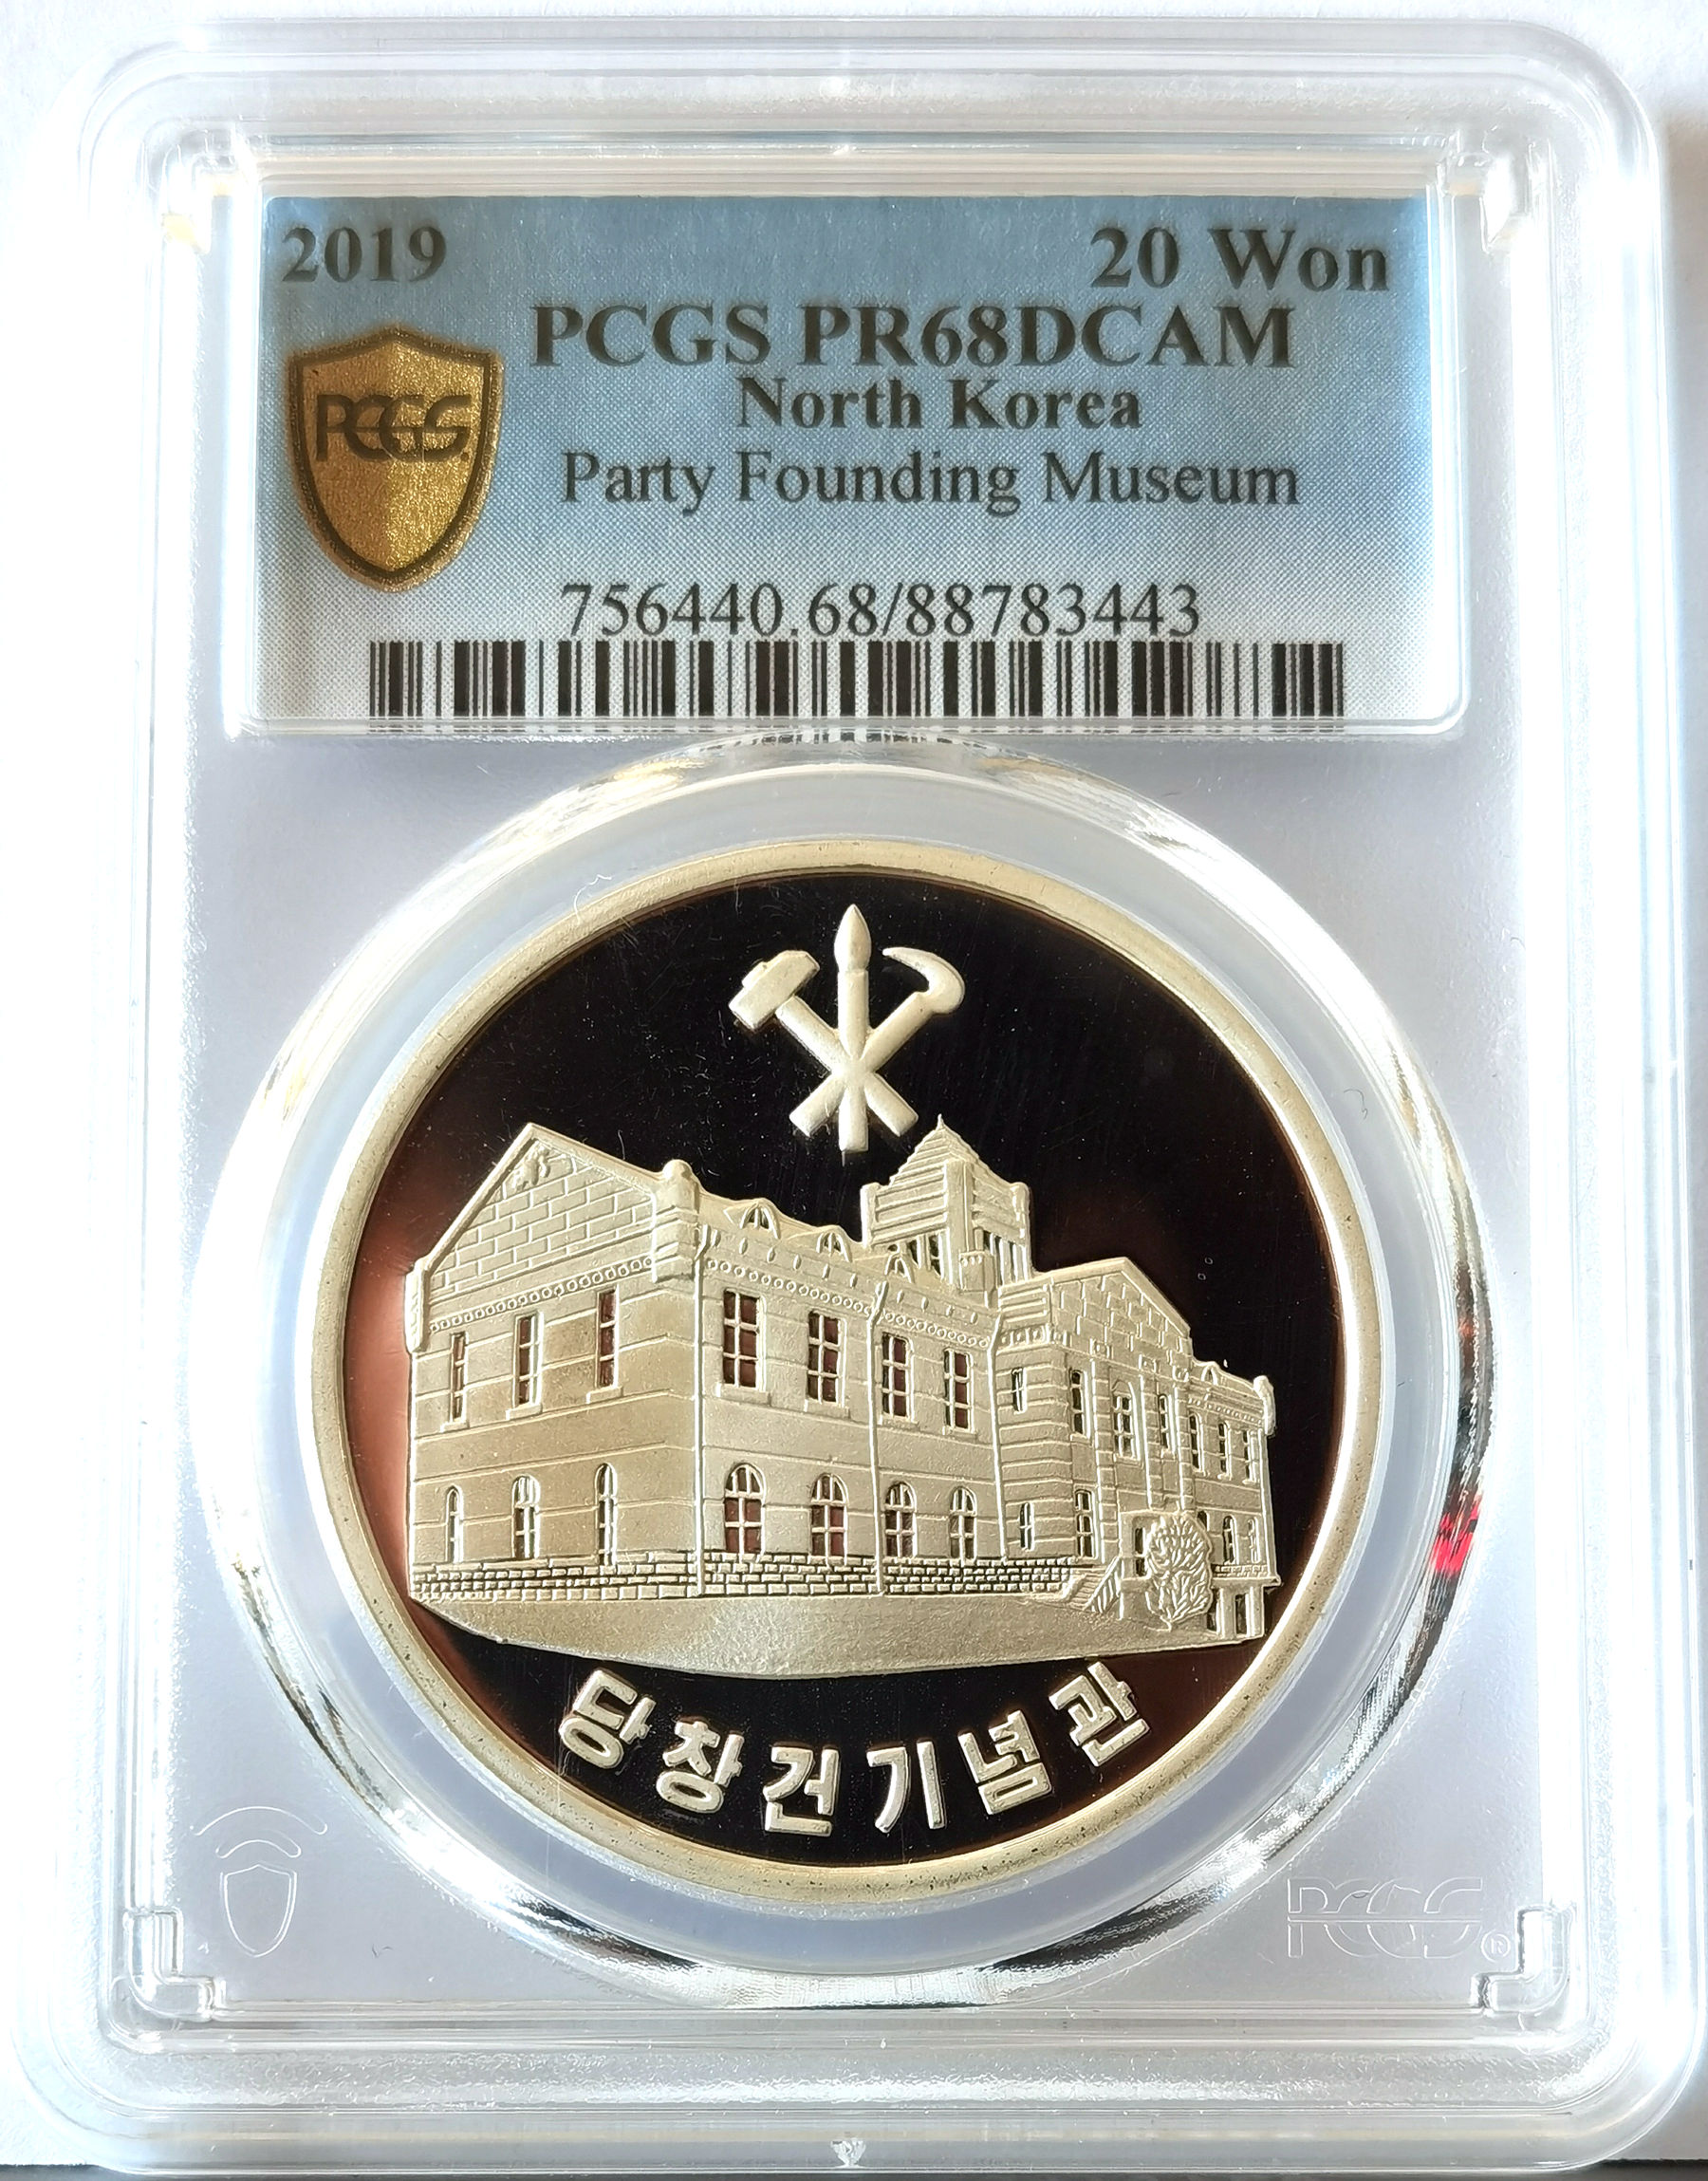 L3626, PCGS PR68 Silver Coin, Korea "Party Founding Defence" 2019